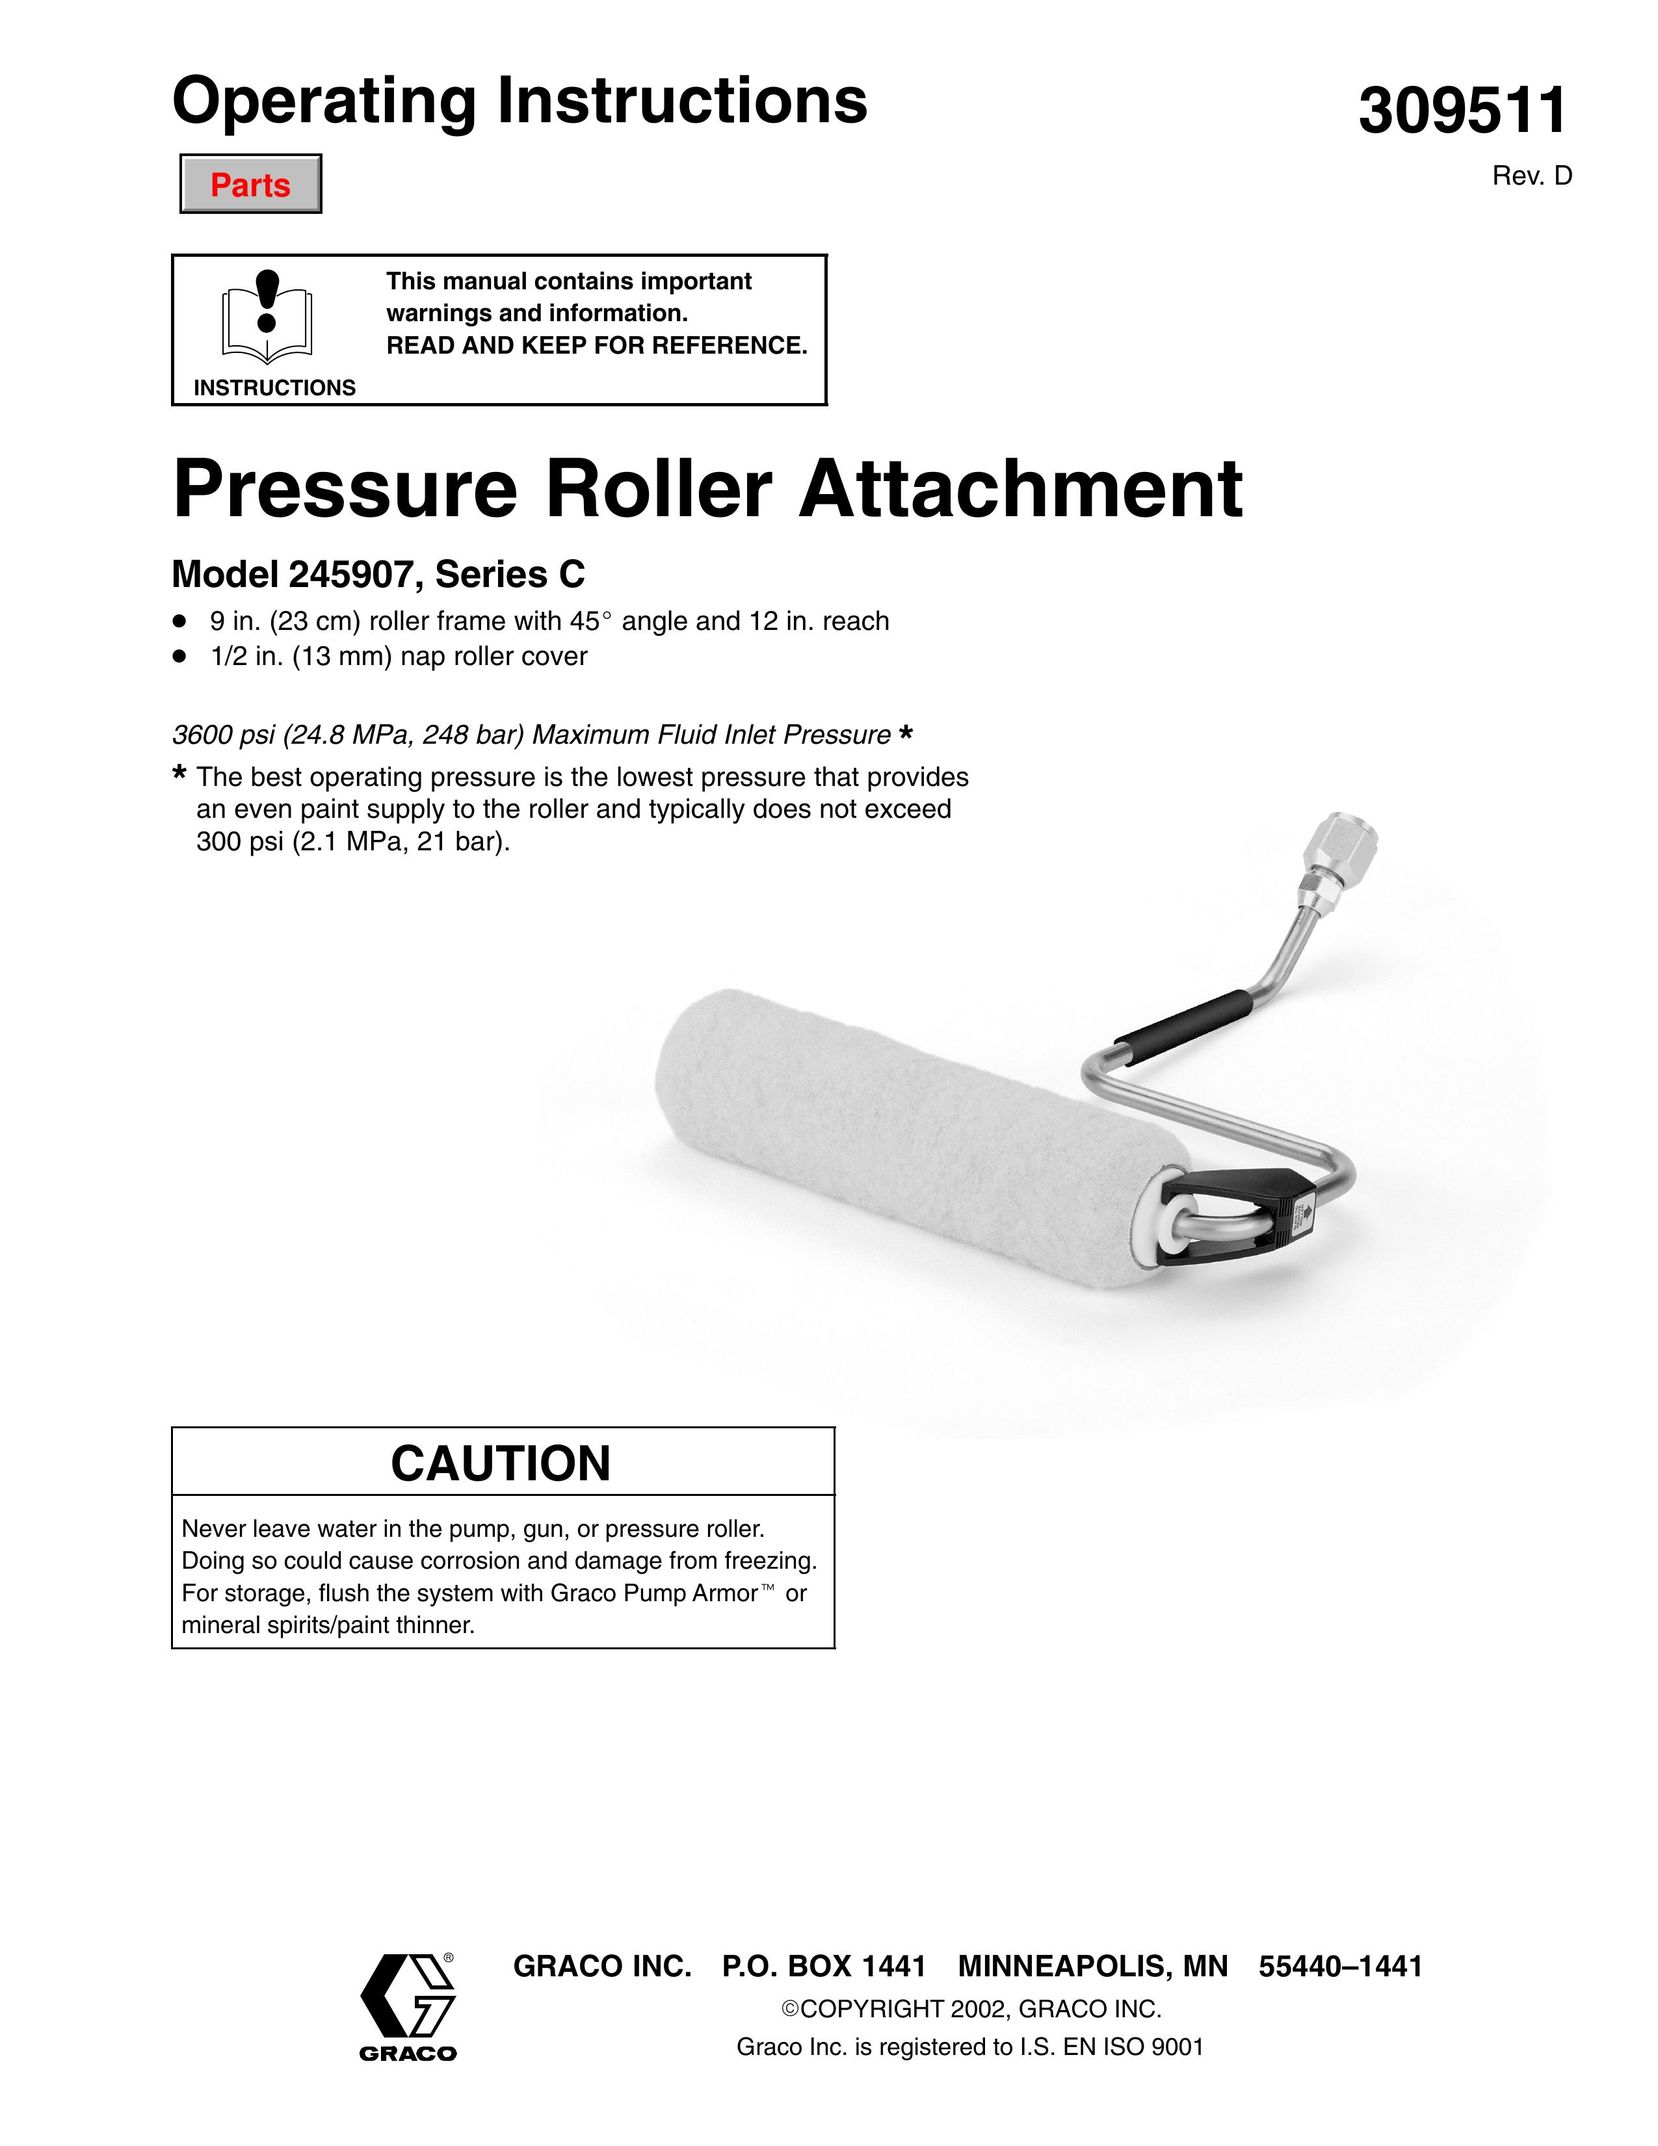 Graco Inc. 309511 Power Roller User Manual